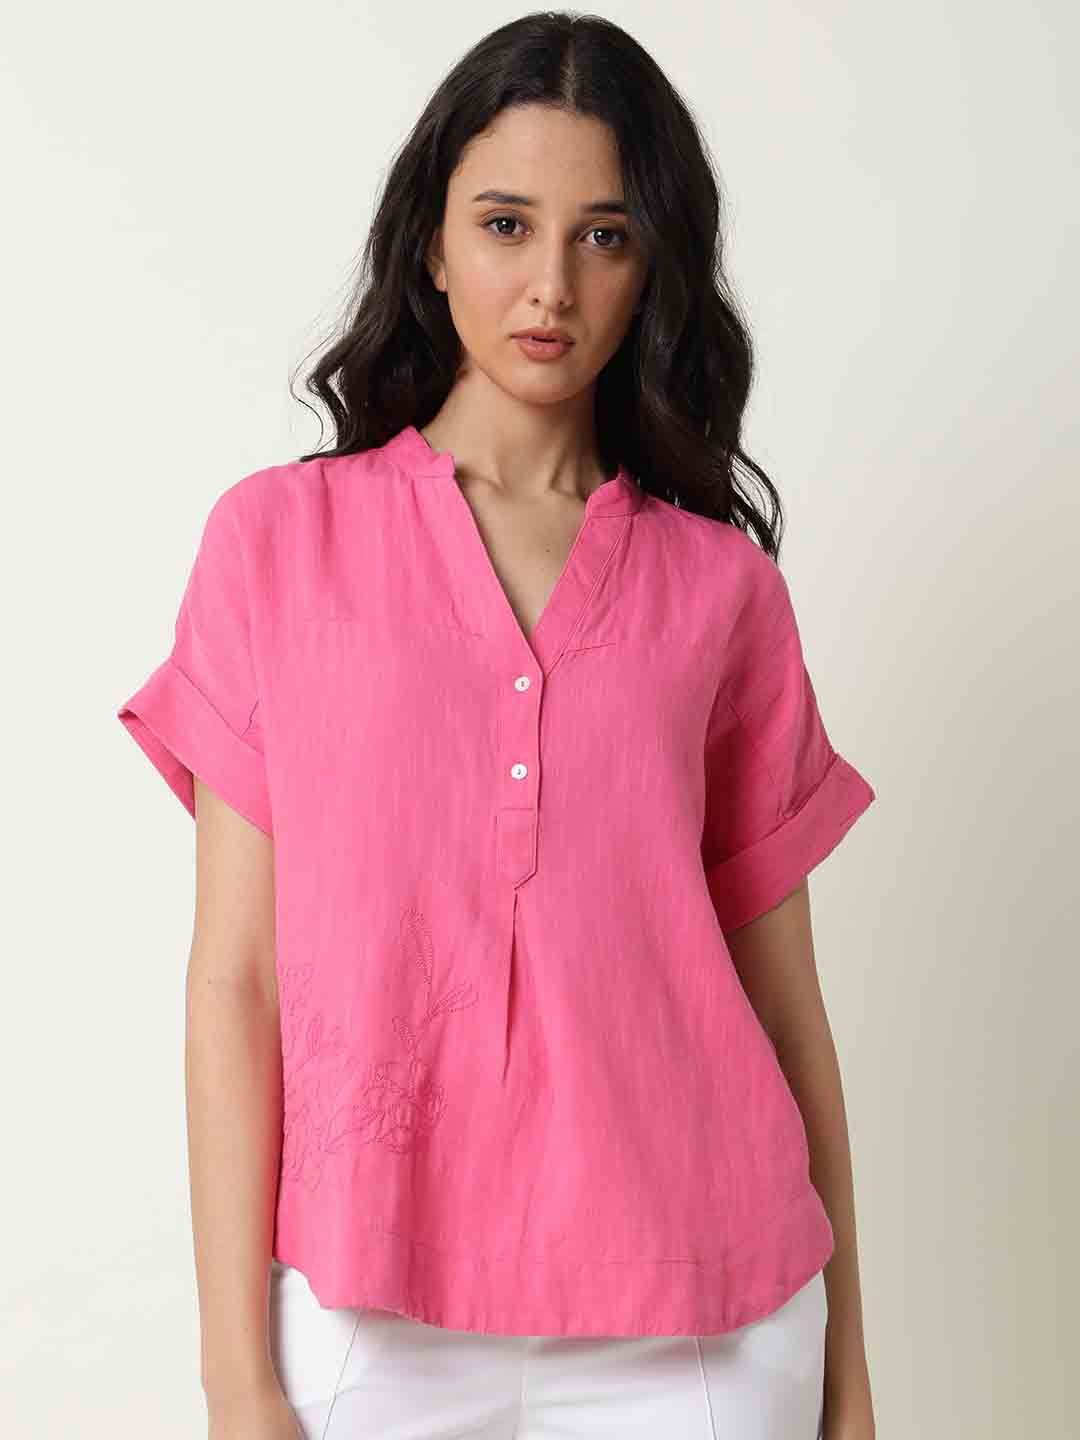 RAREISM Pink Mandarin Collar Extended Sleeves Shirt Style Top Price in India